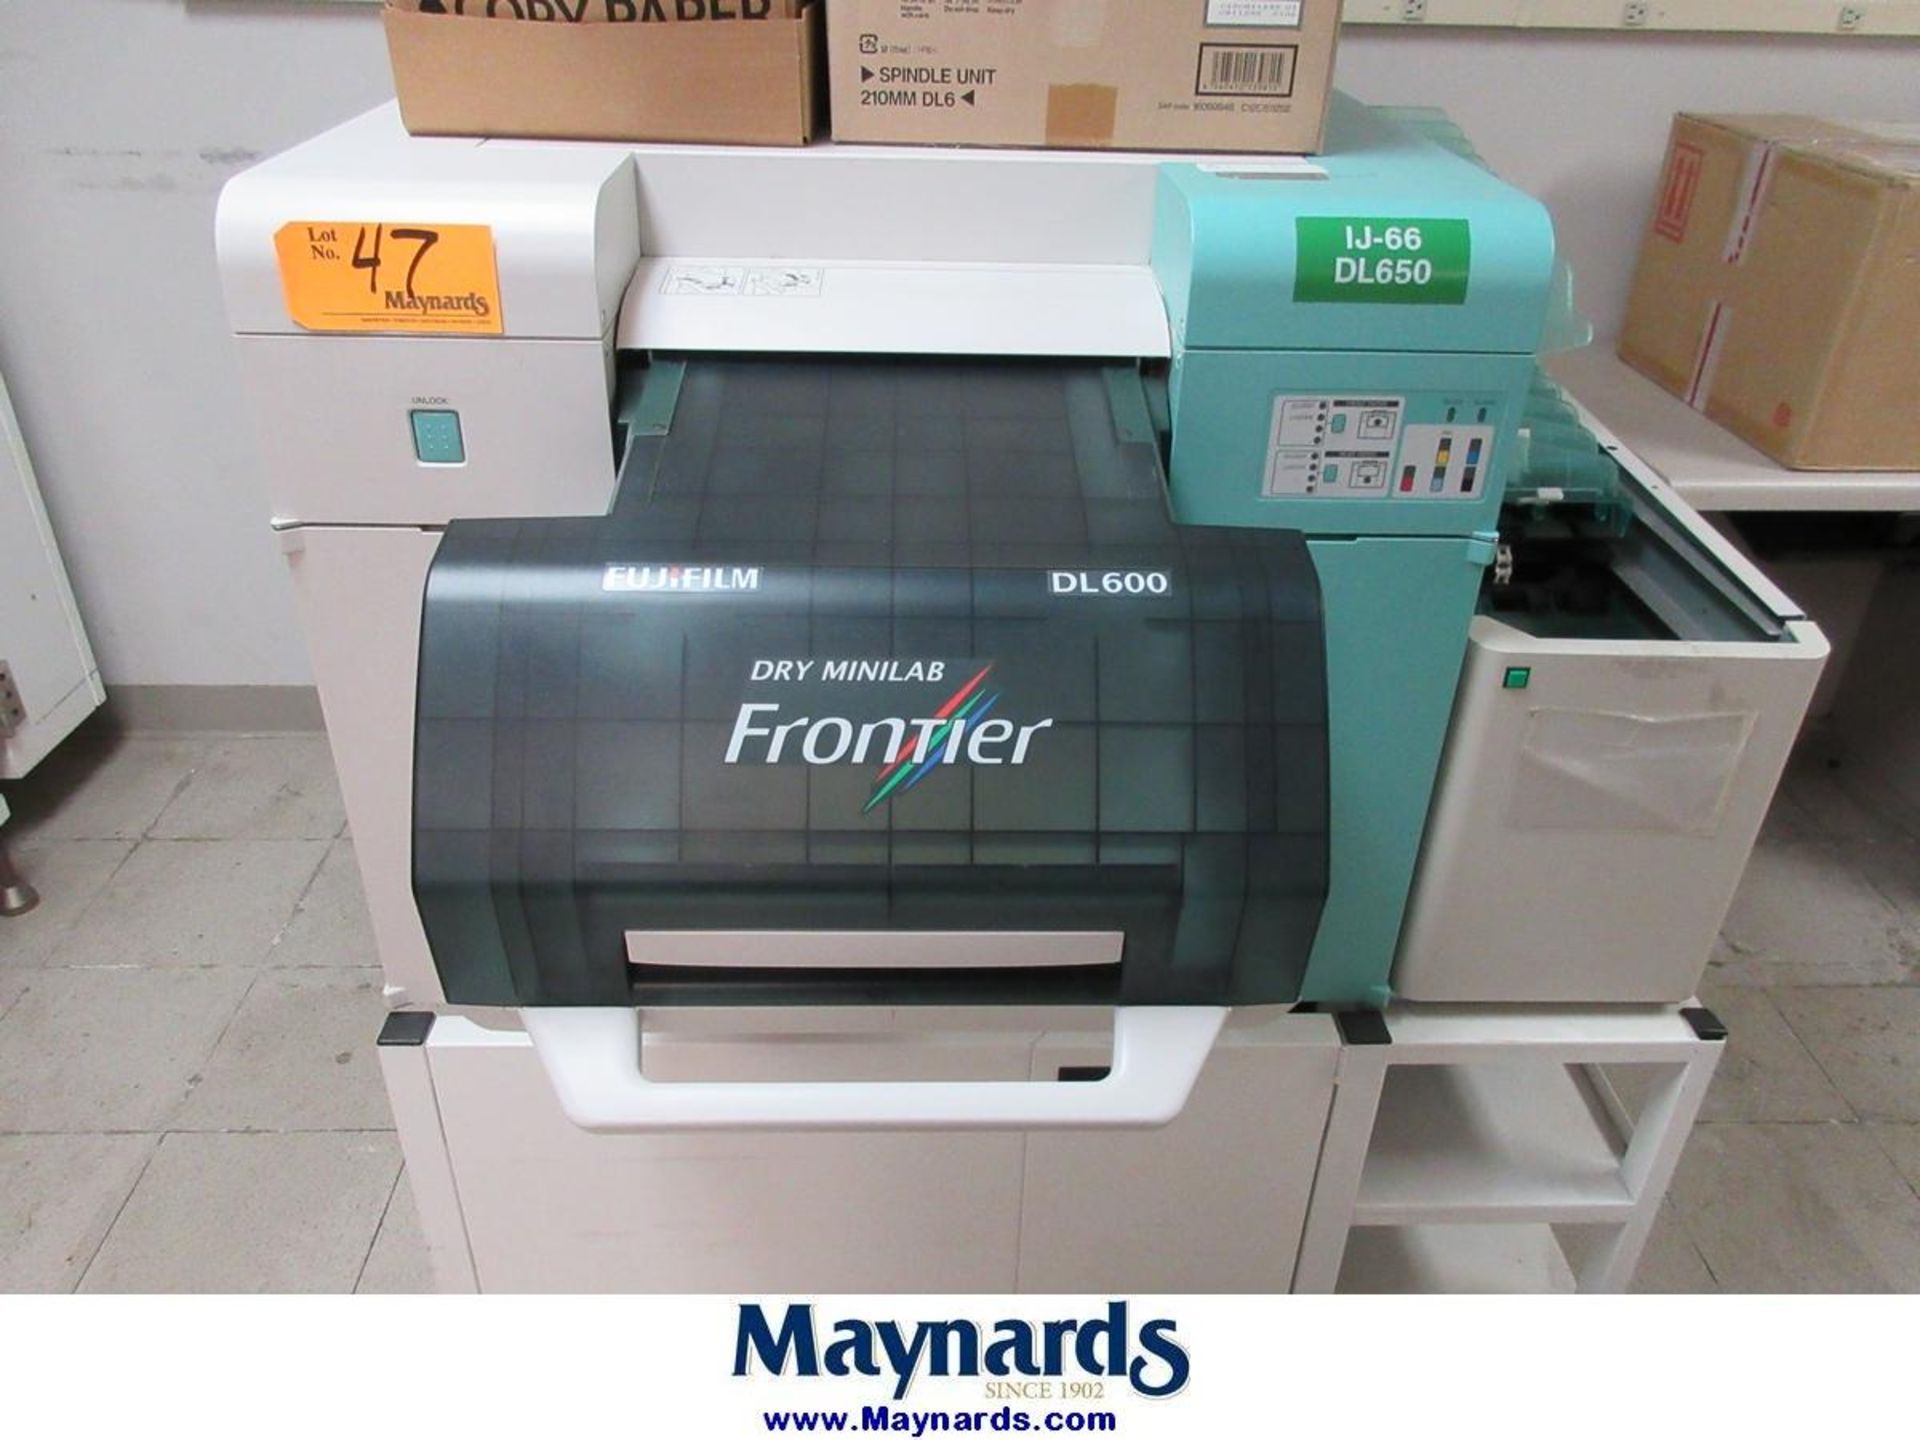 Fujifilm Corp. DL600 Dry Minilab Frontier Dry Minilab Frontier Printer - Image 2 of 7